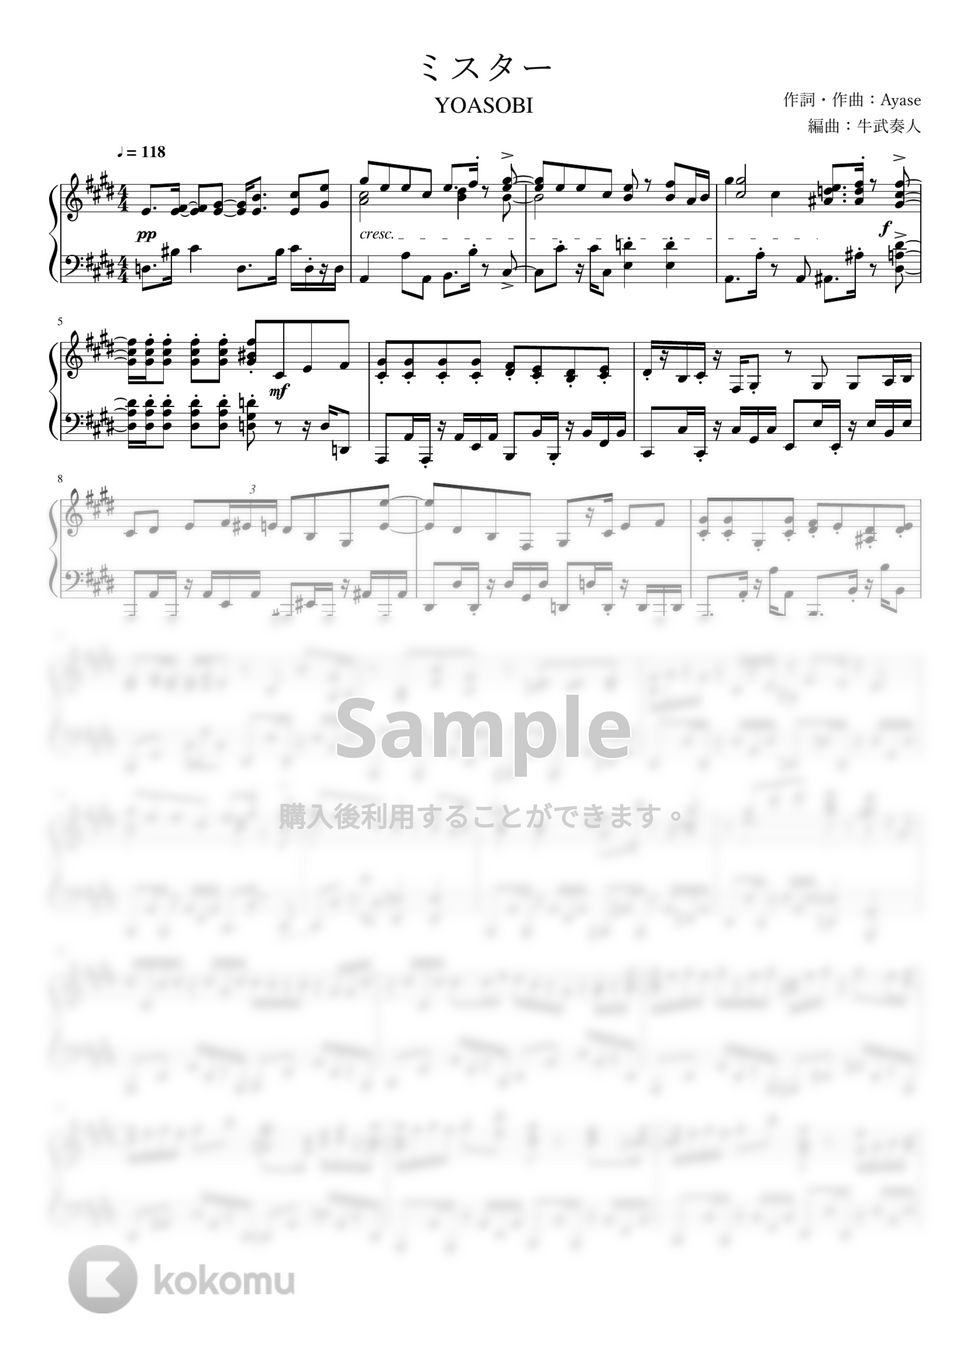 YOASOBI - ミスター (上級ピアノ) by 牛武奏人